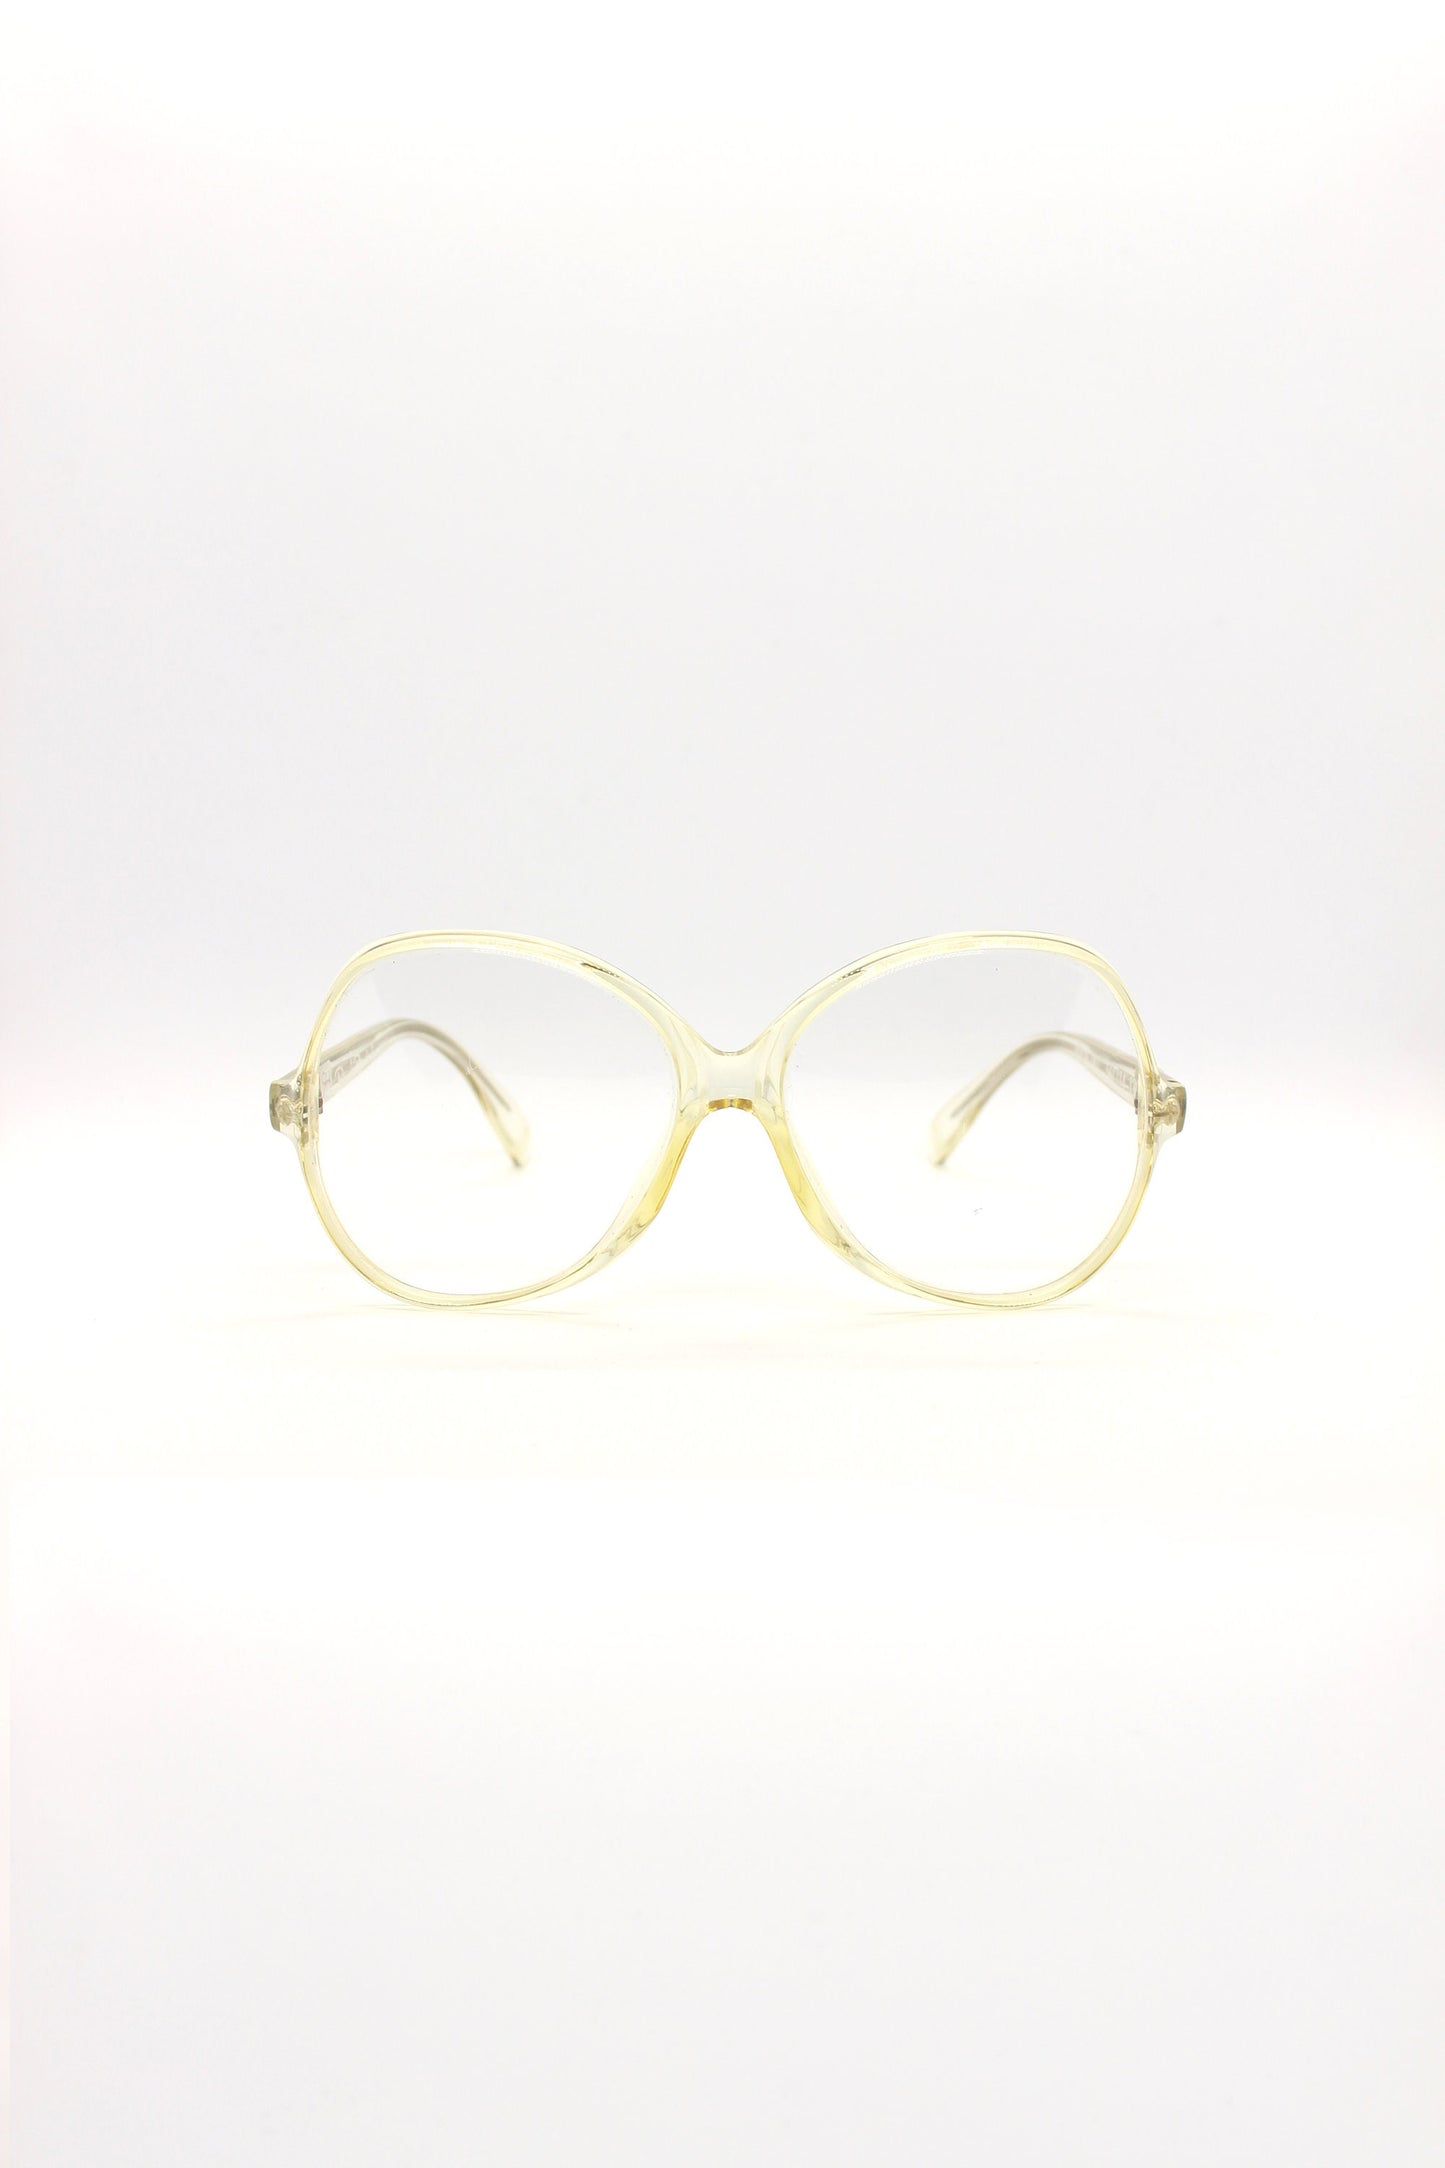 RENATO BALESTRA Vintage New old stock eyeglasses frames. Mod. 06-001